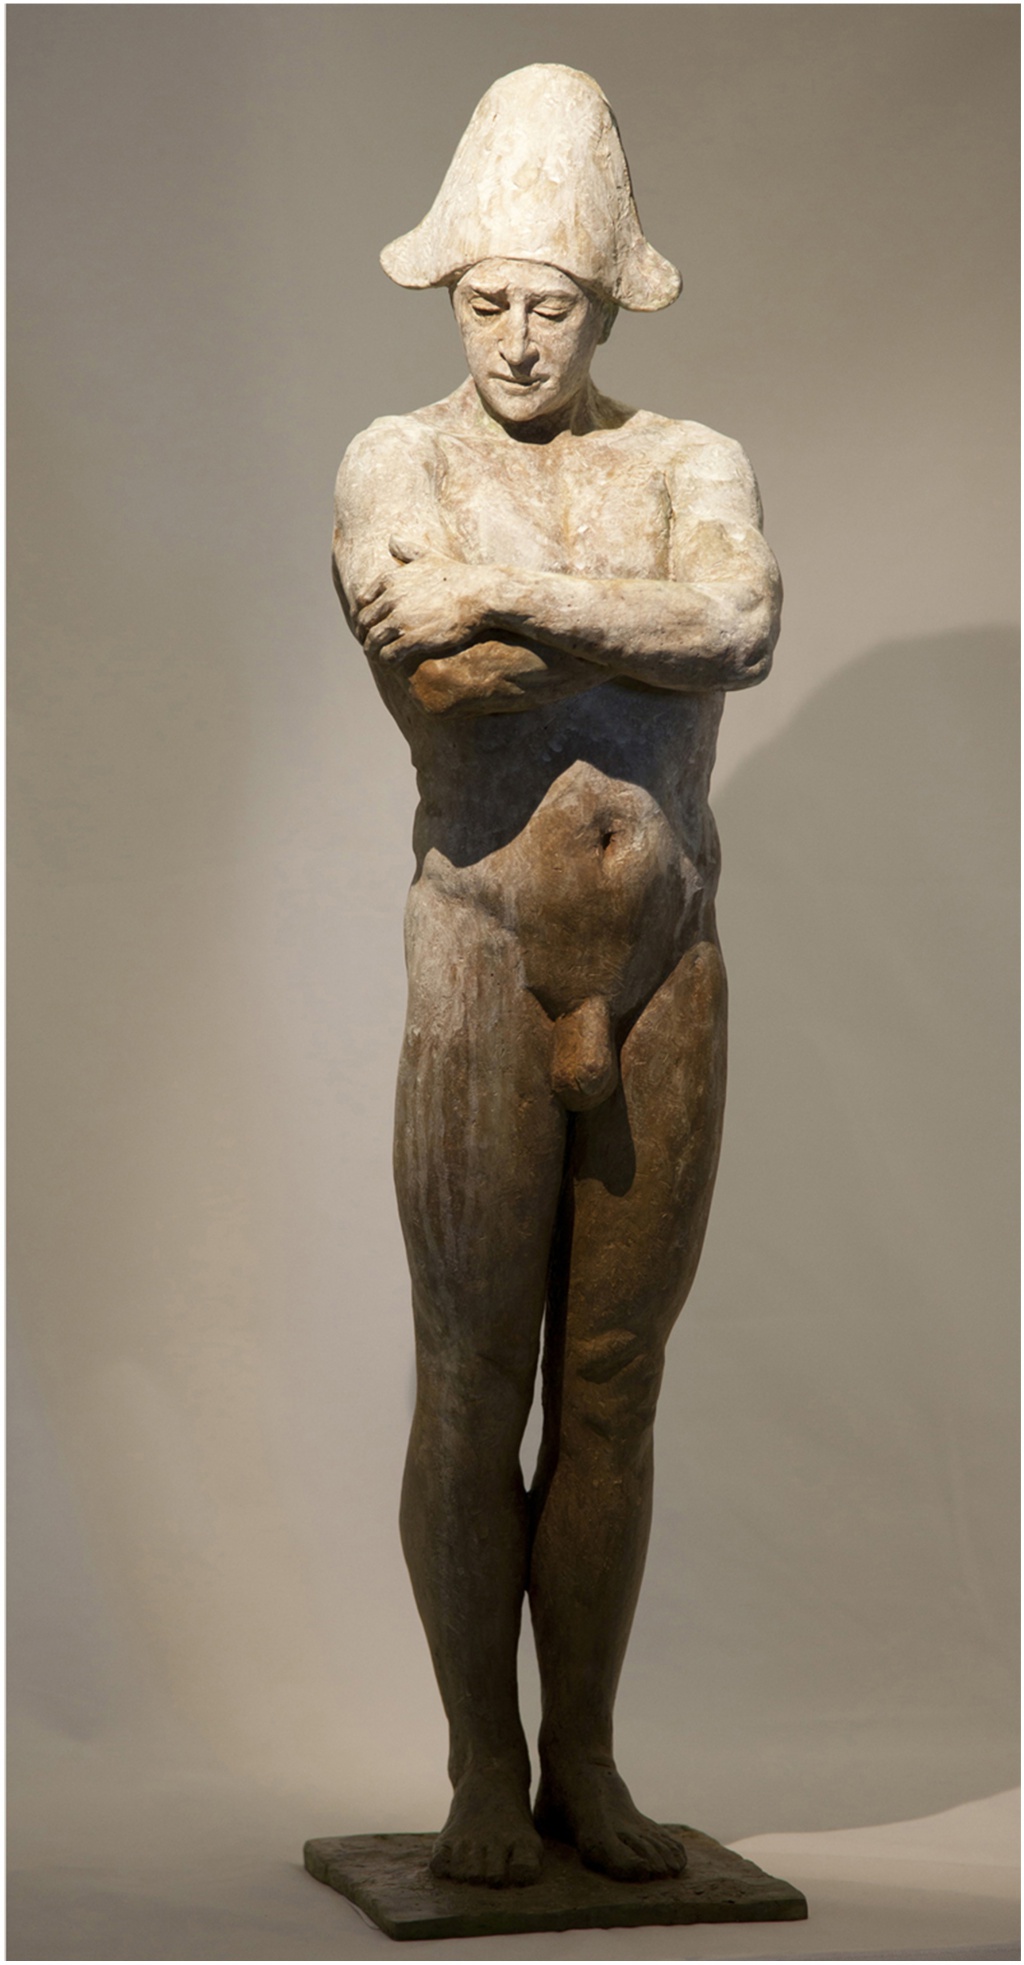 CODERCH & MALAVIA, Don Tancredo, 81 x 25 x 21 cm, bronze